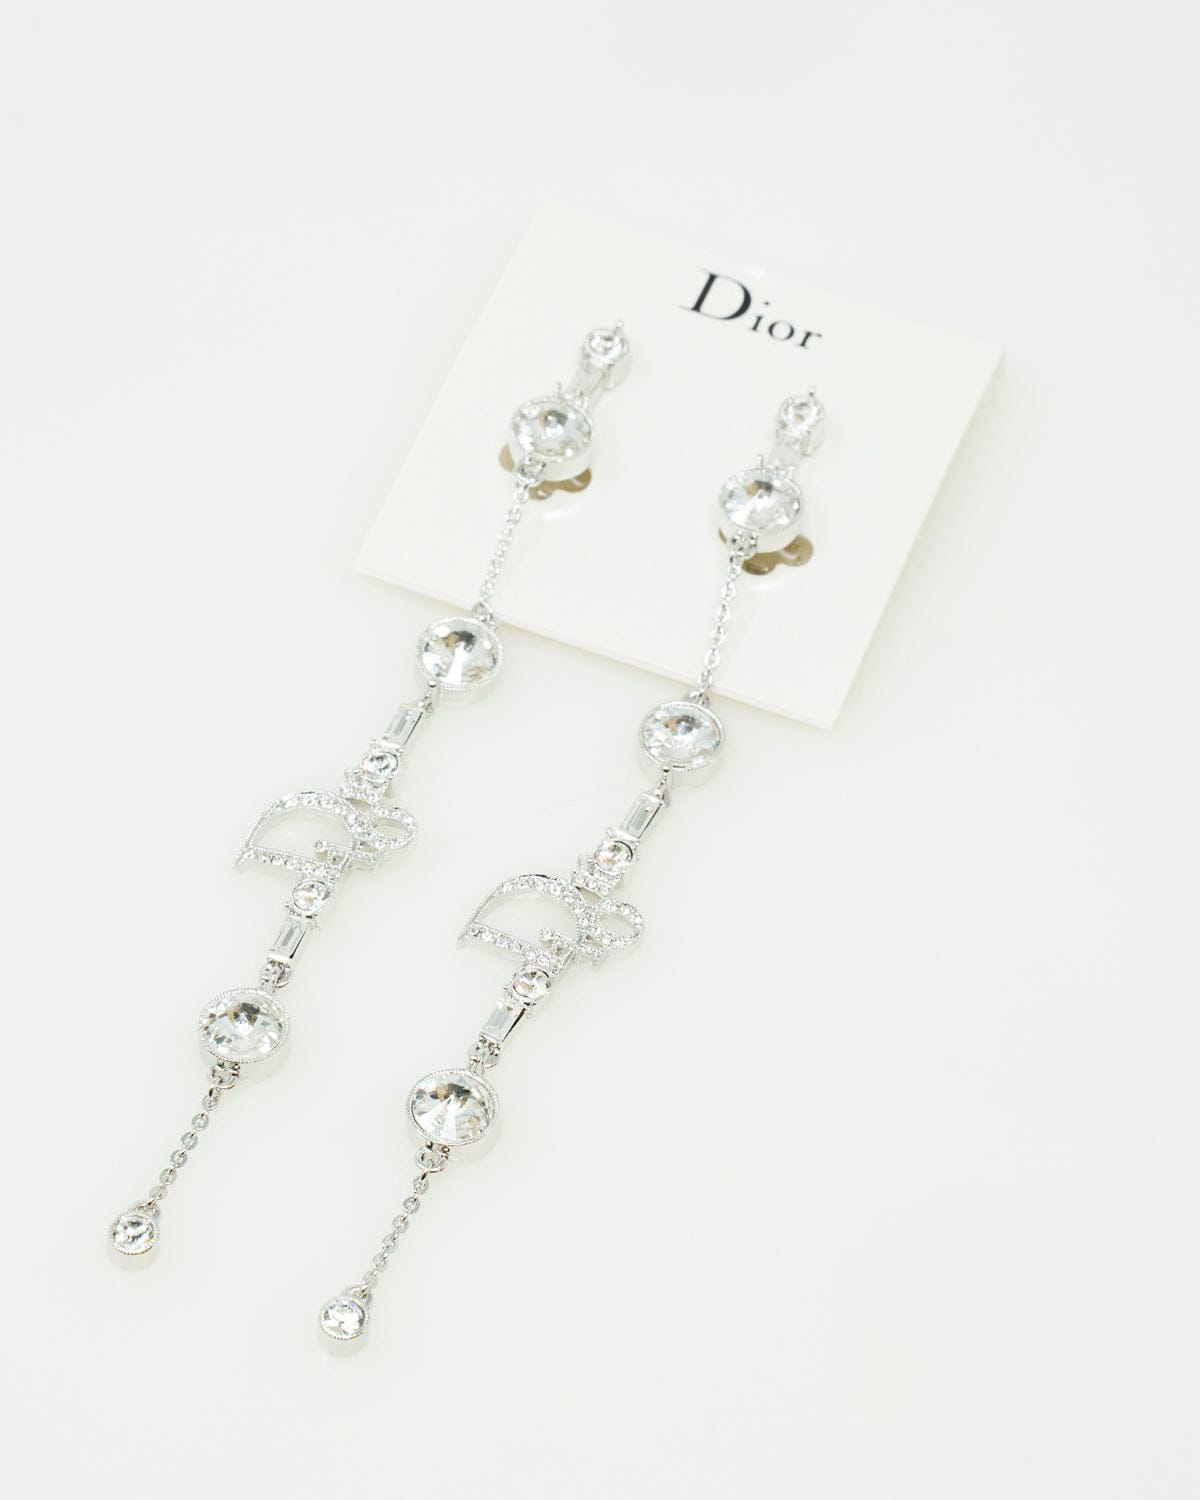 Christian Dior Christian Dior Diamante Drop Clip On Earrings  - AGL1872